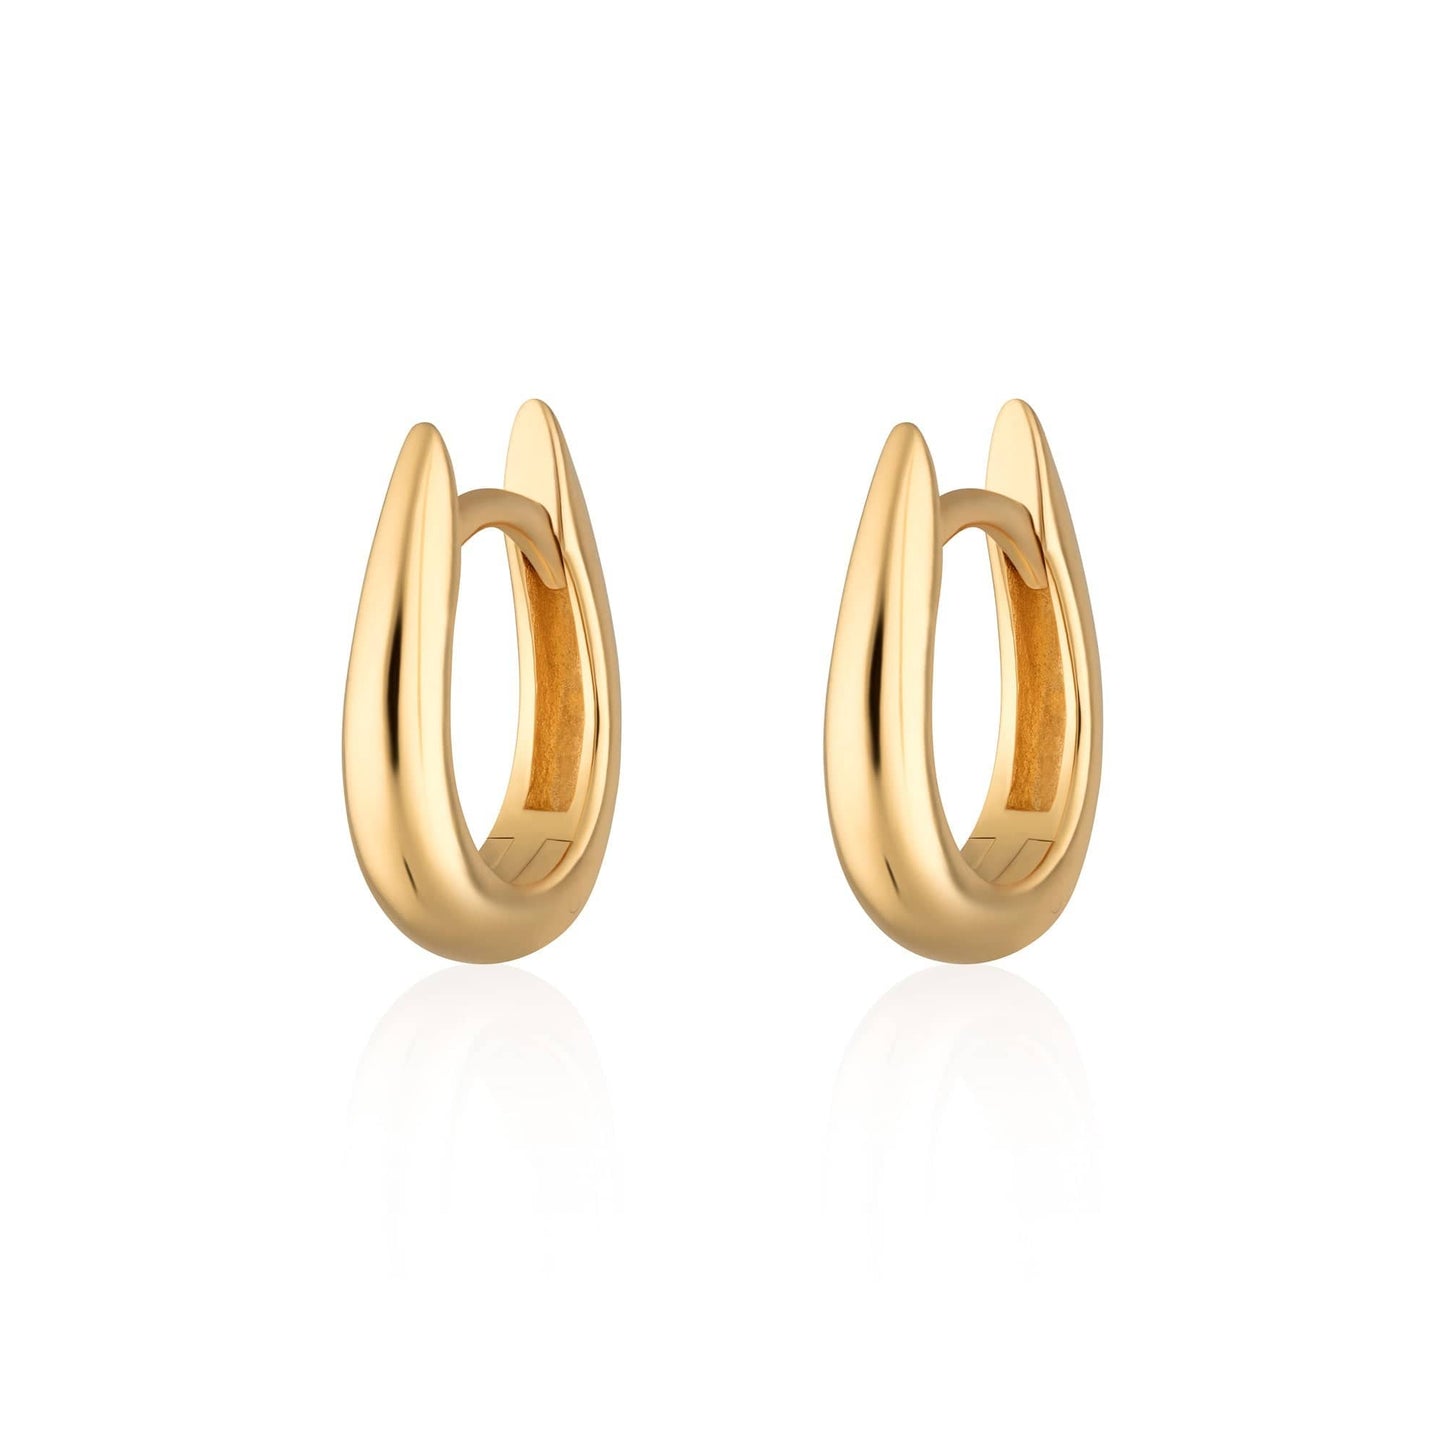 EAR-GPL Claw Huggie Earrings - 18k Gold Plated Sterling Si